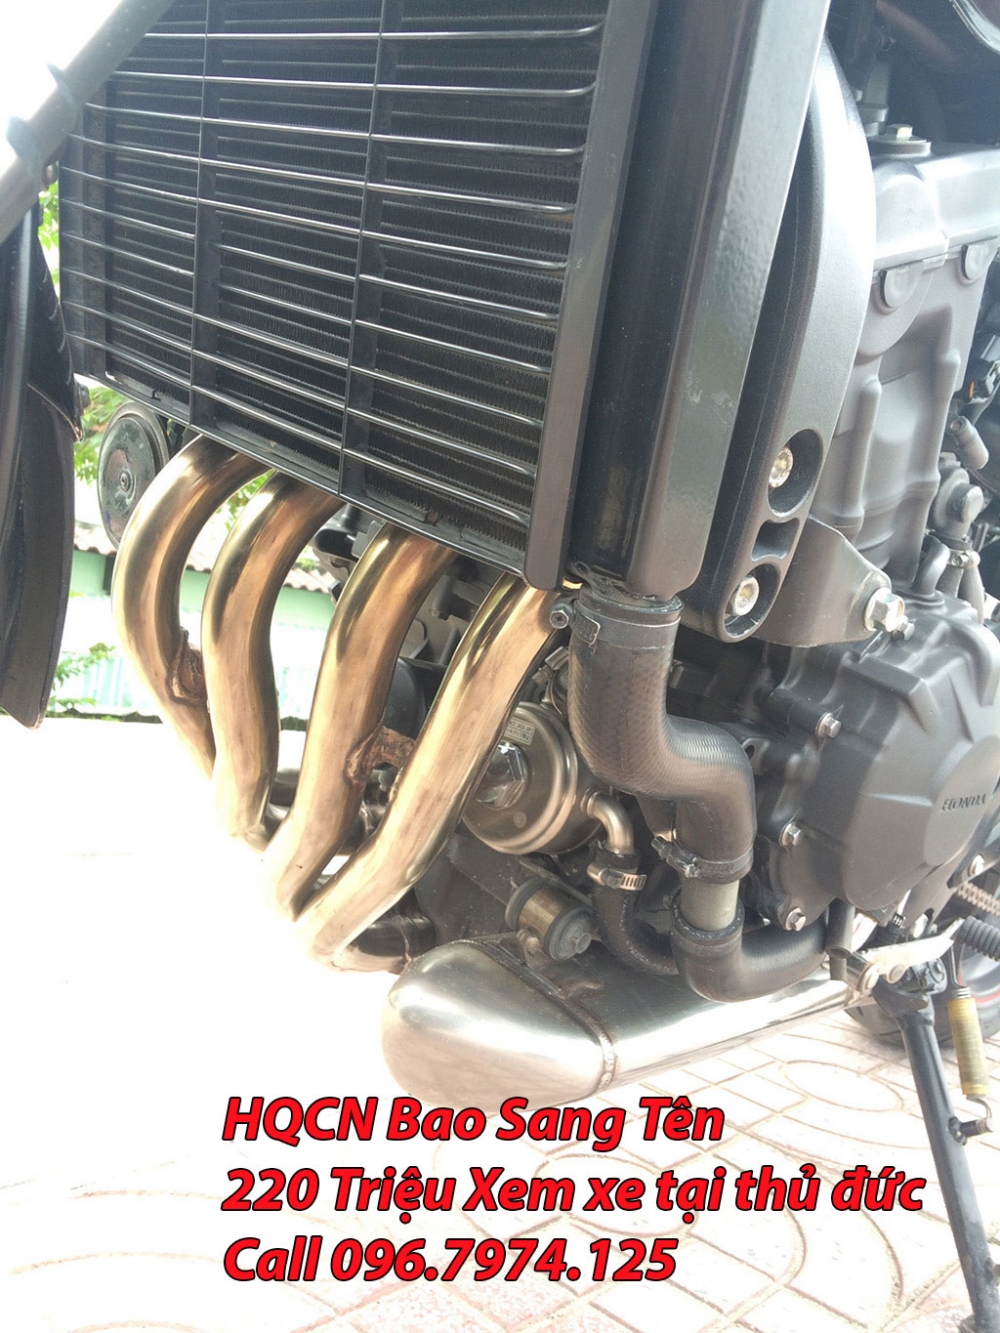 ___ Honda Hornet 600cc 2012 ___ HQCN Bao Sang Ten - 6